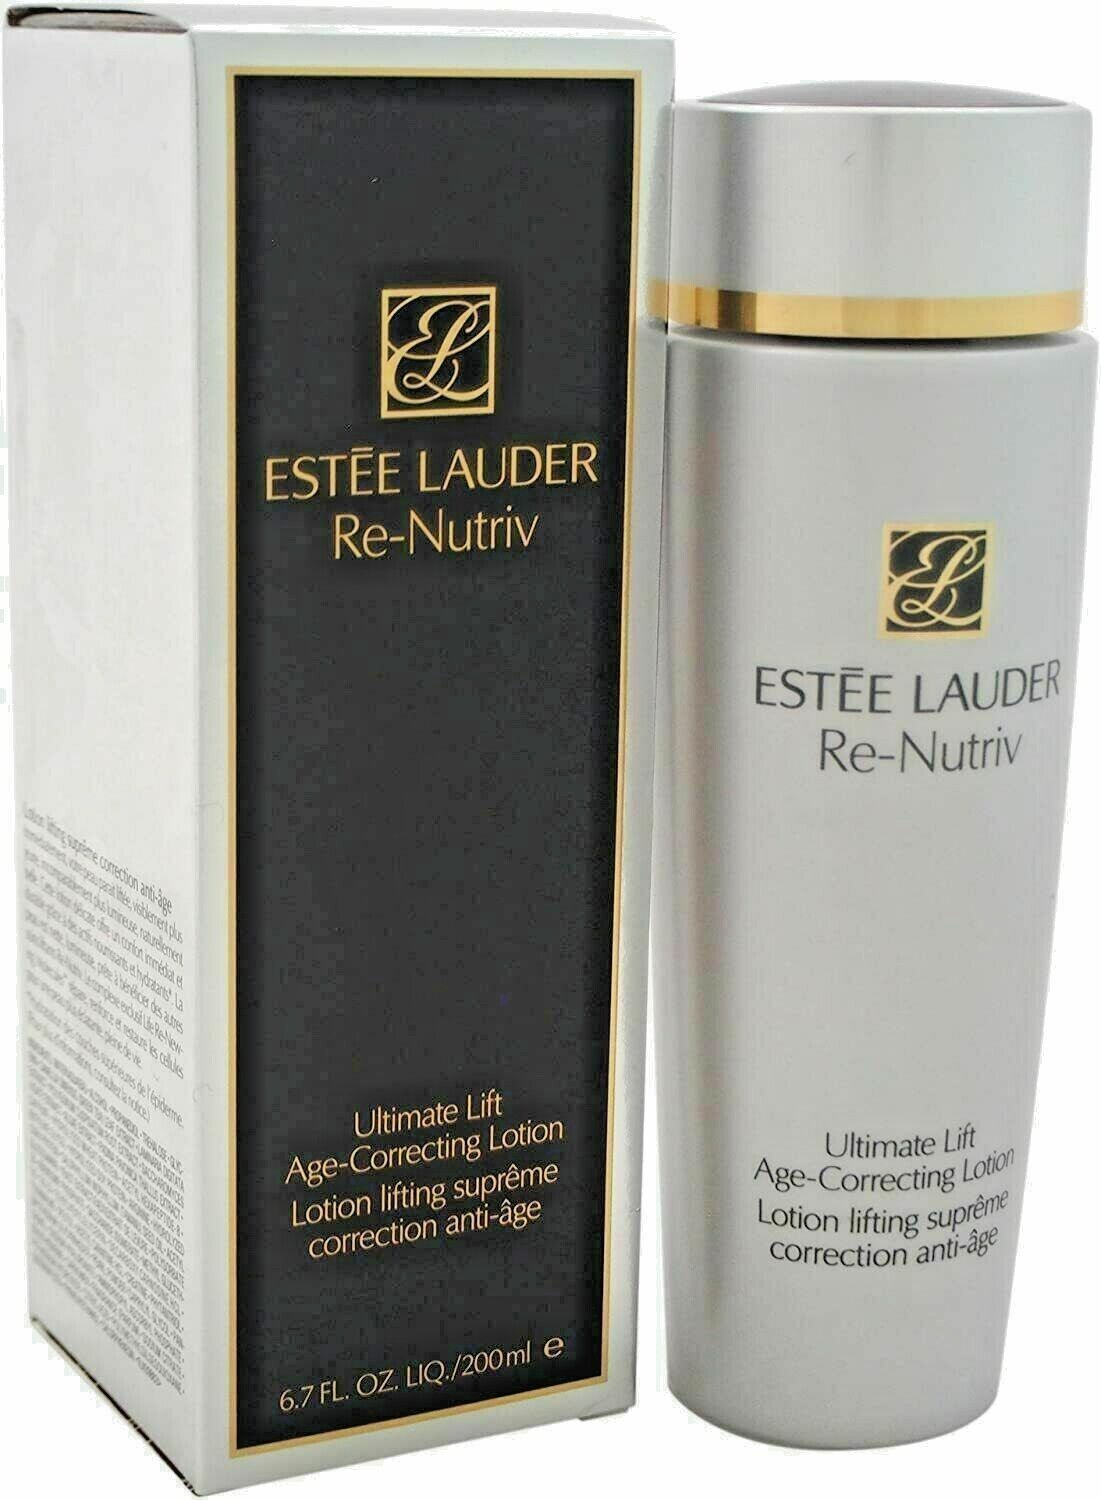 Estee Lauder Re-Nutriv Ultimate Lift Age-Correcting Lotion 6.7 oz / 200 ml NIB - $46.71